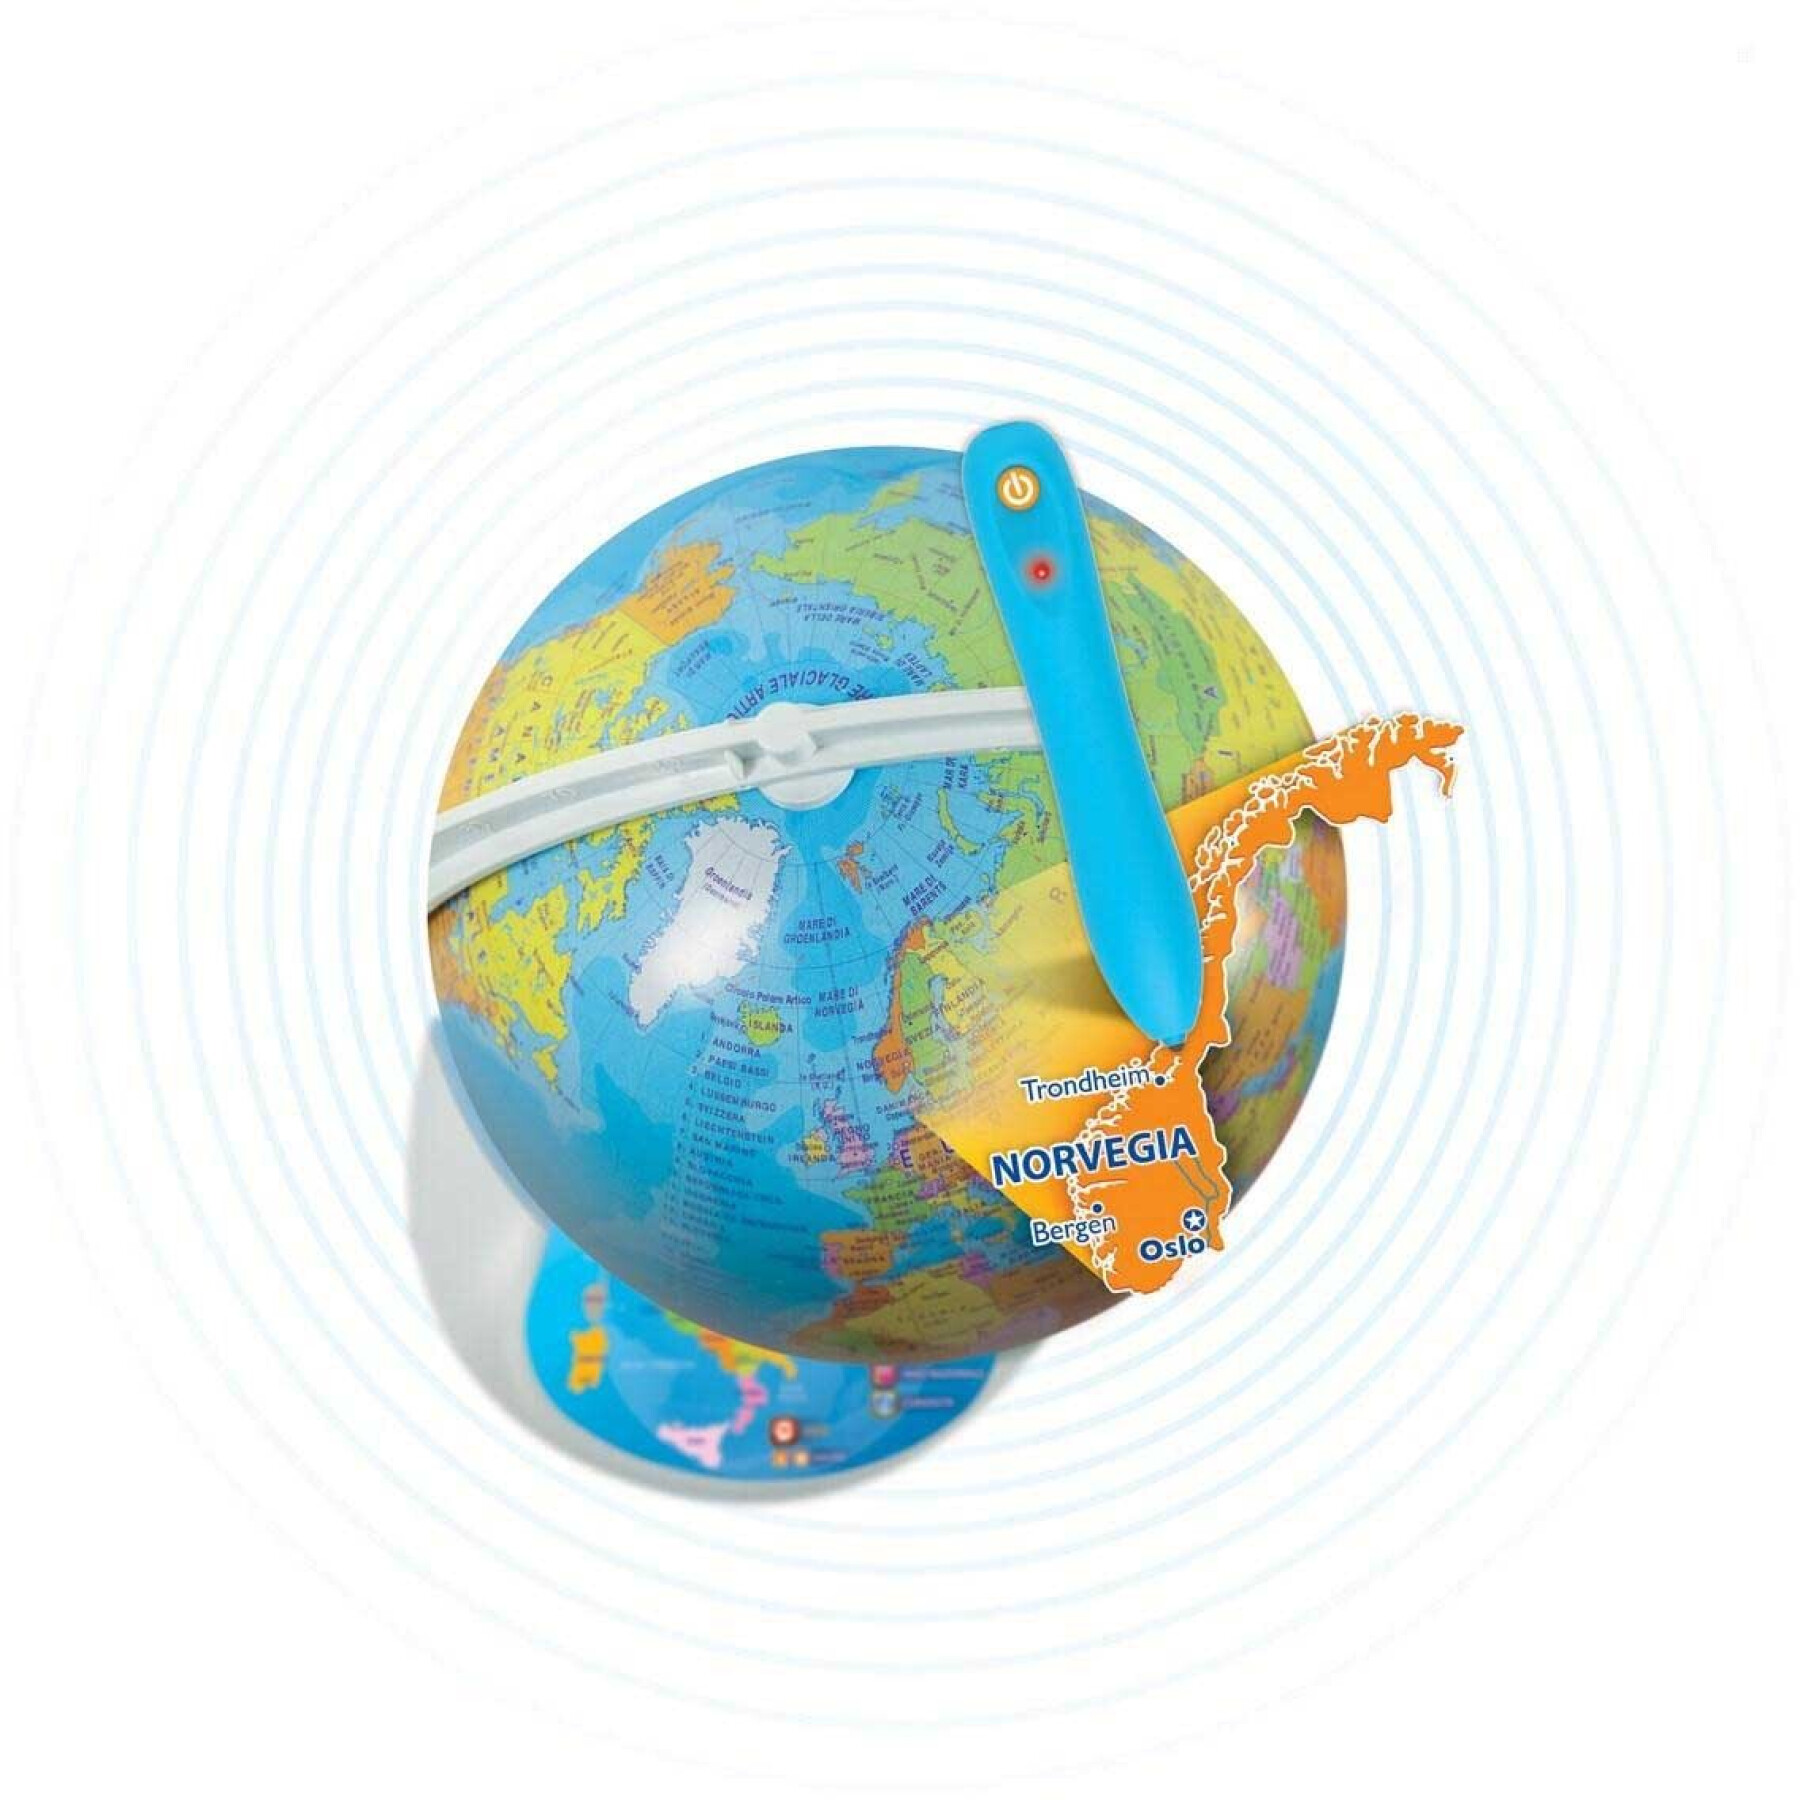 Clementoni - Know the World with Exploraglobe! - Interactive Globe - 60903  